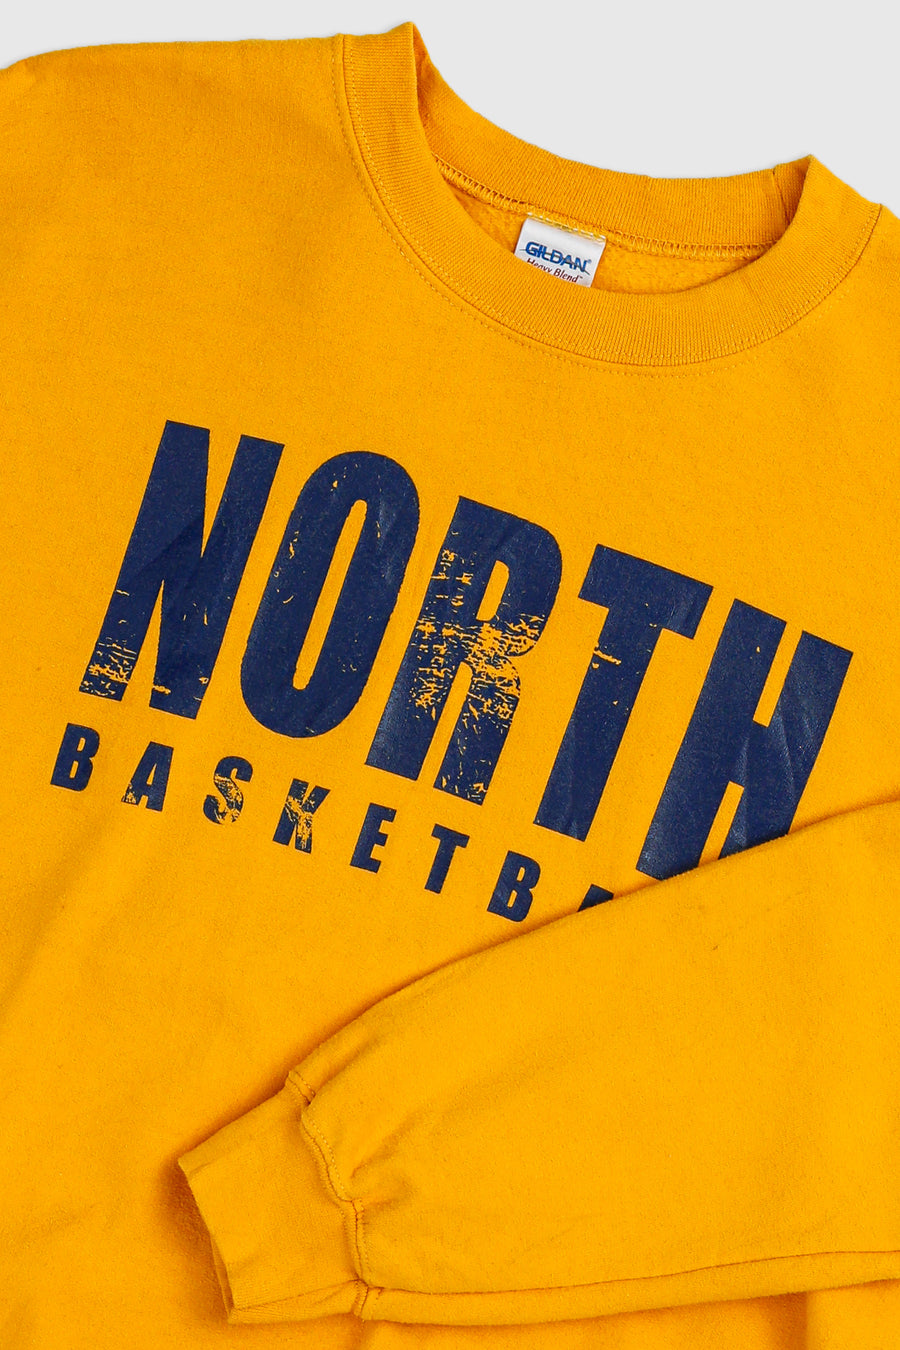 Vintage North Basketball Sweatshirt - M